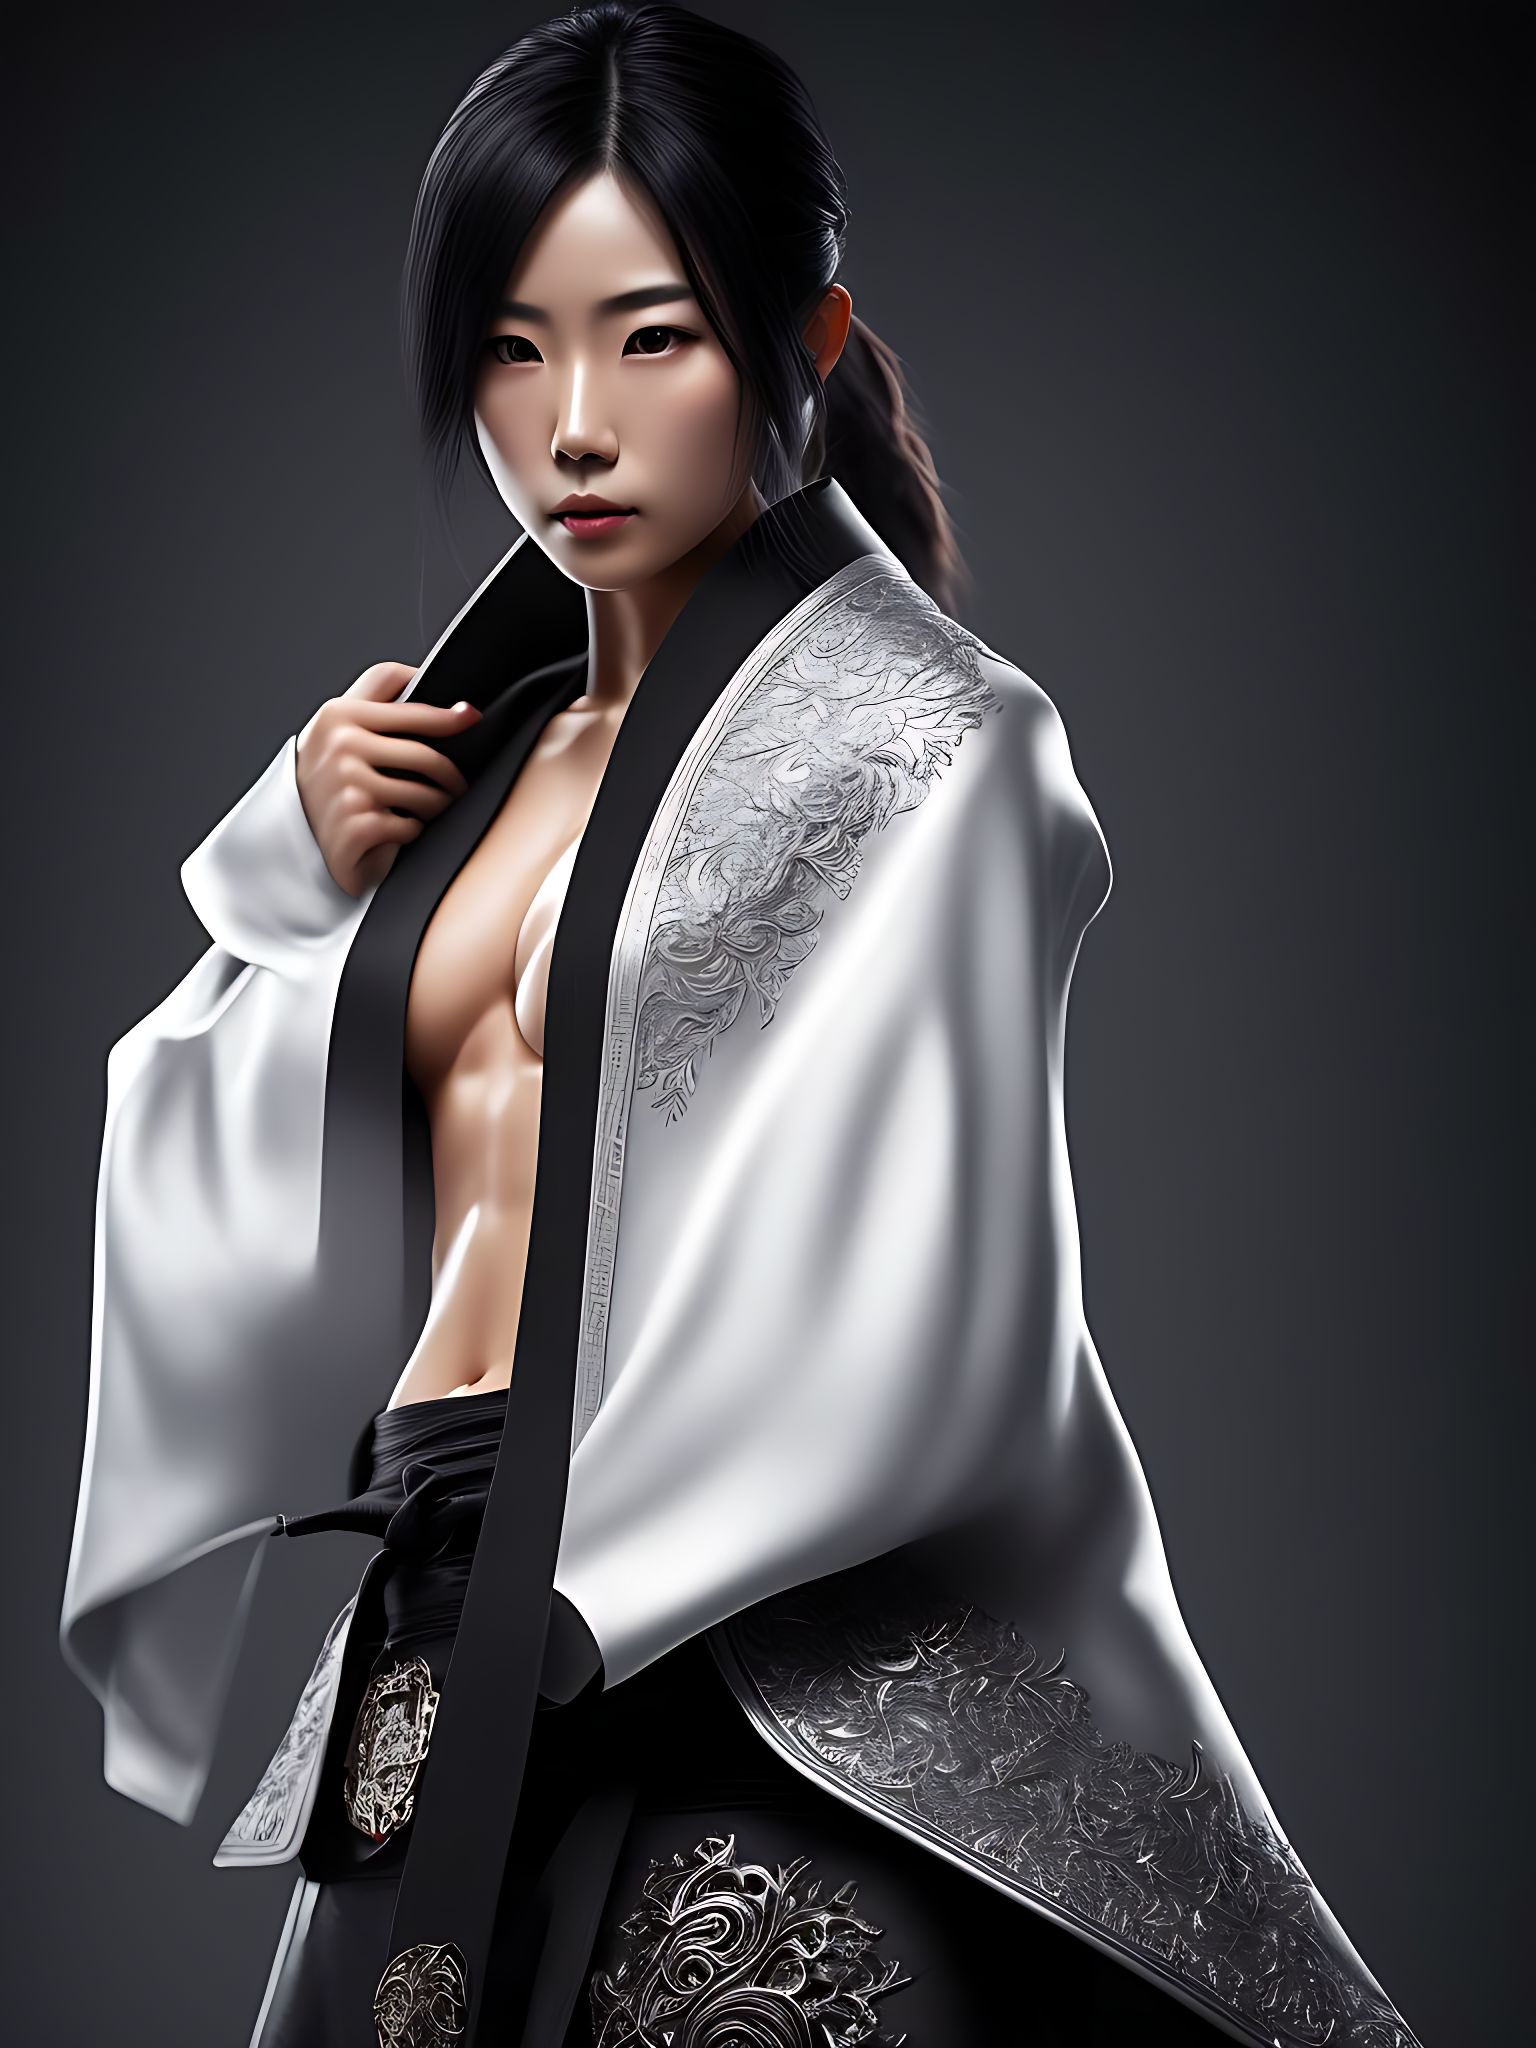 Abs girl japan cosplay photo model